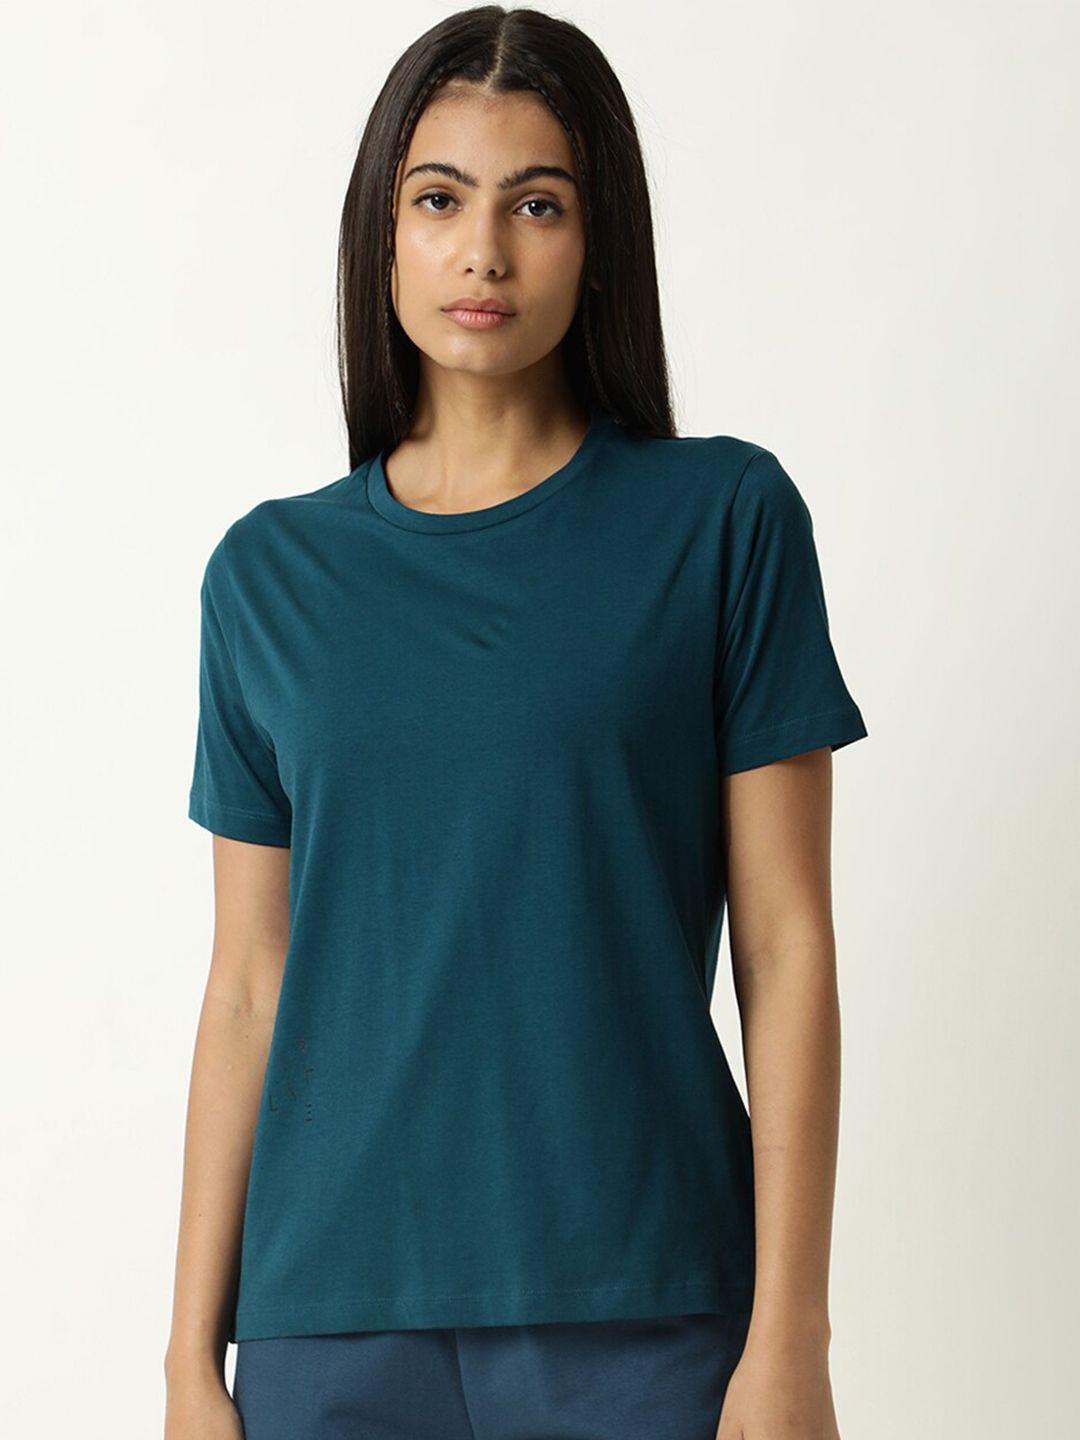 articale-women-green-solid-slim-fit-cotton-t-shirt